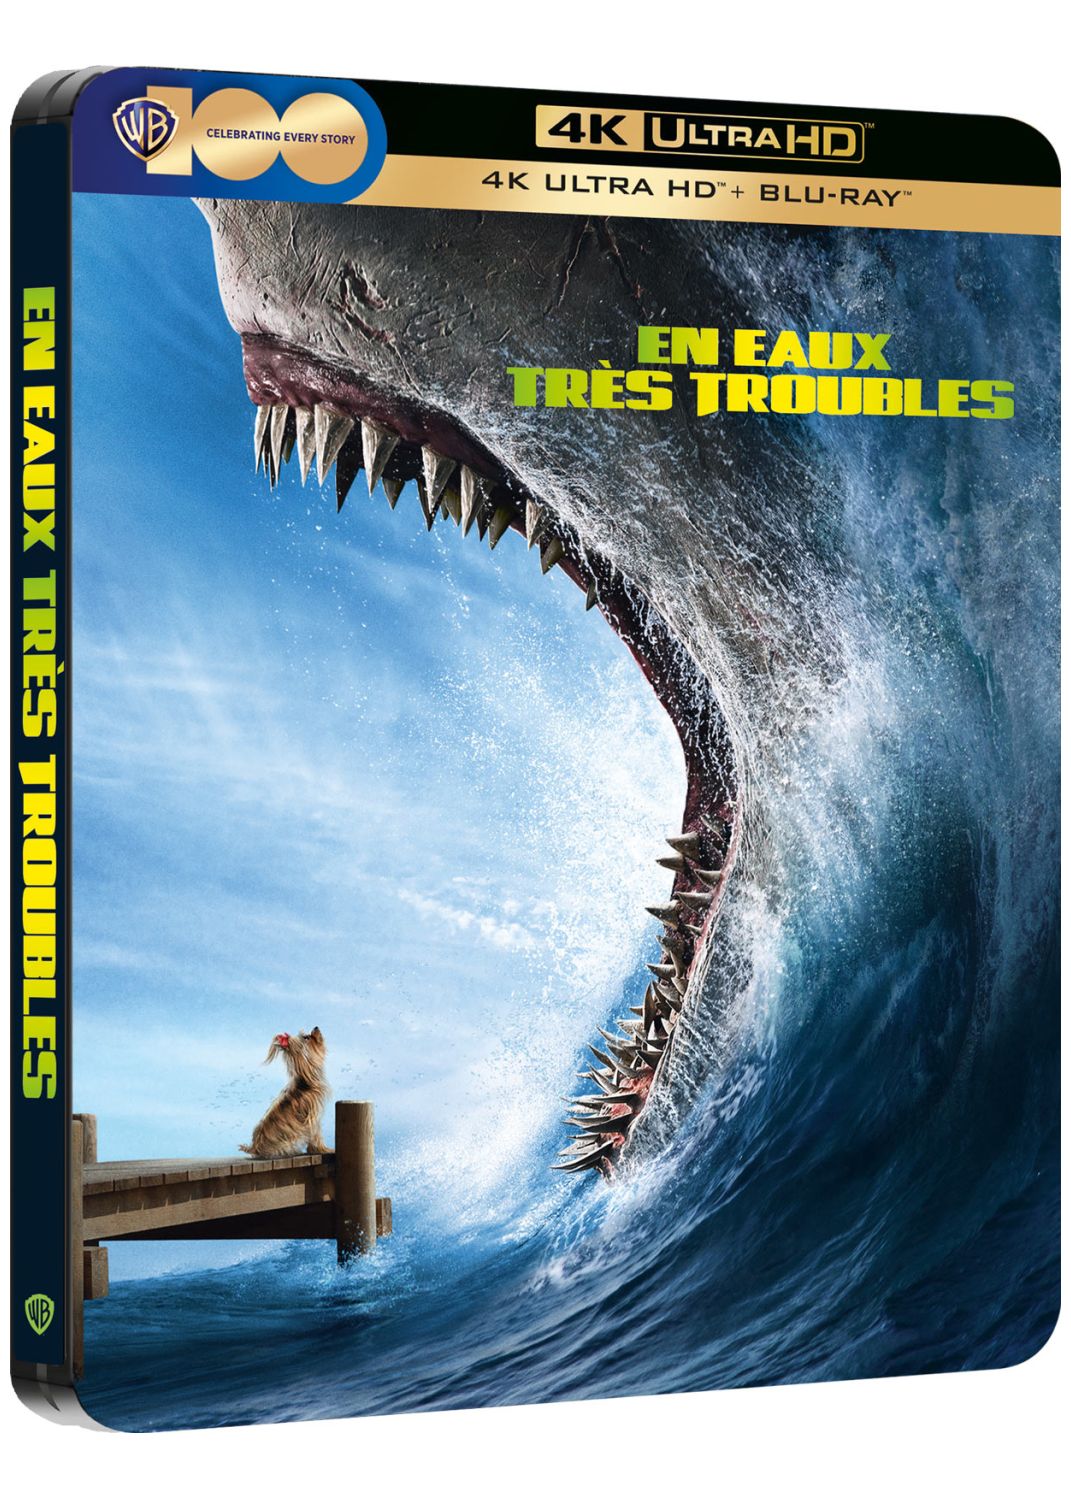 En eaux très troubles [DVD/Blu-ray/4K UHD à la location]